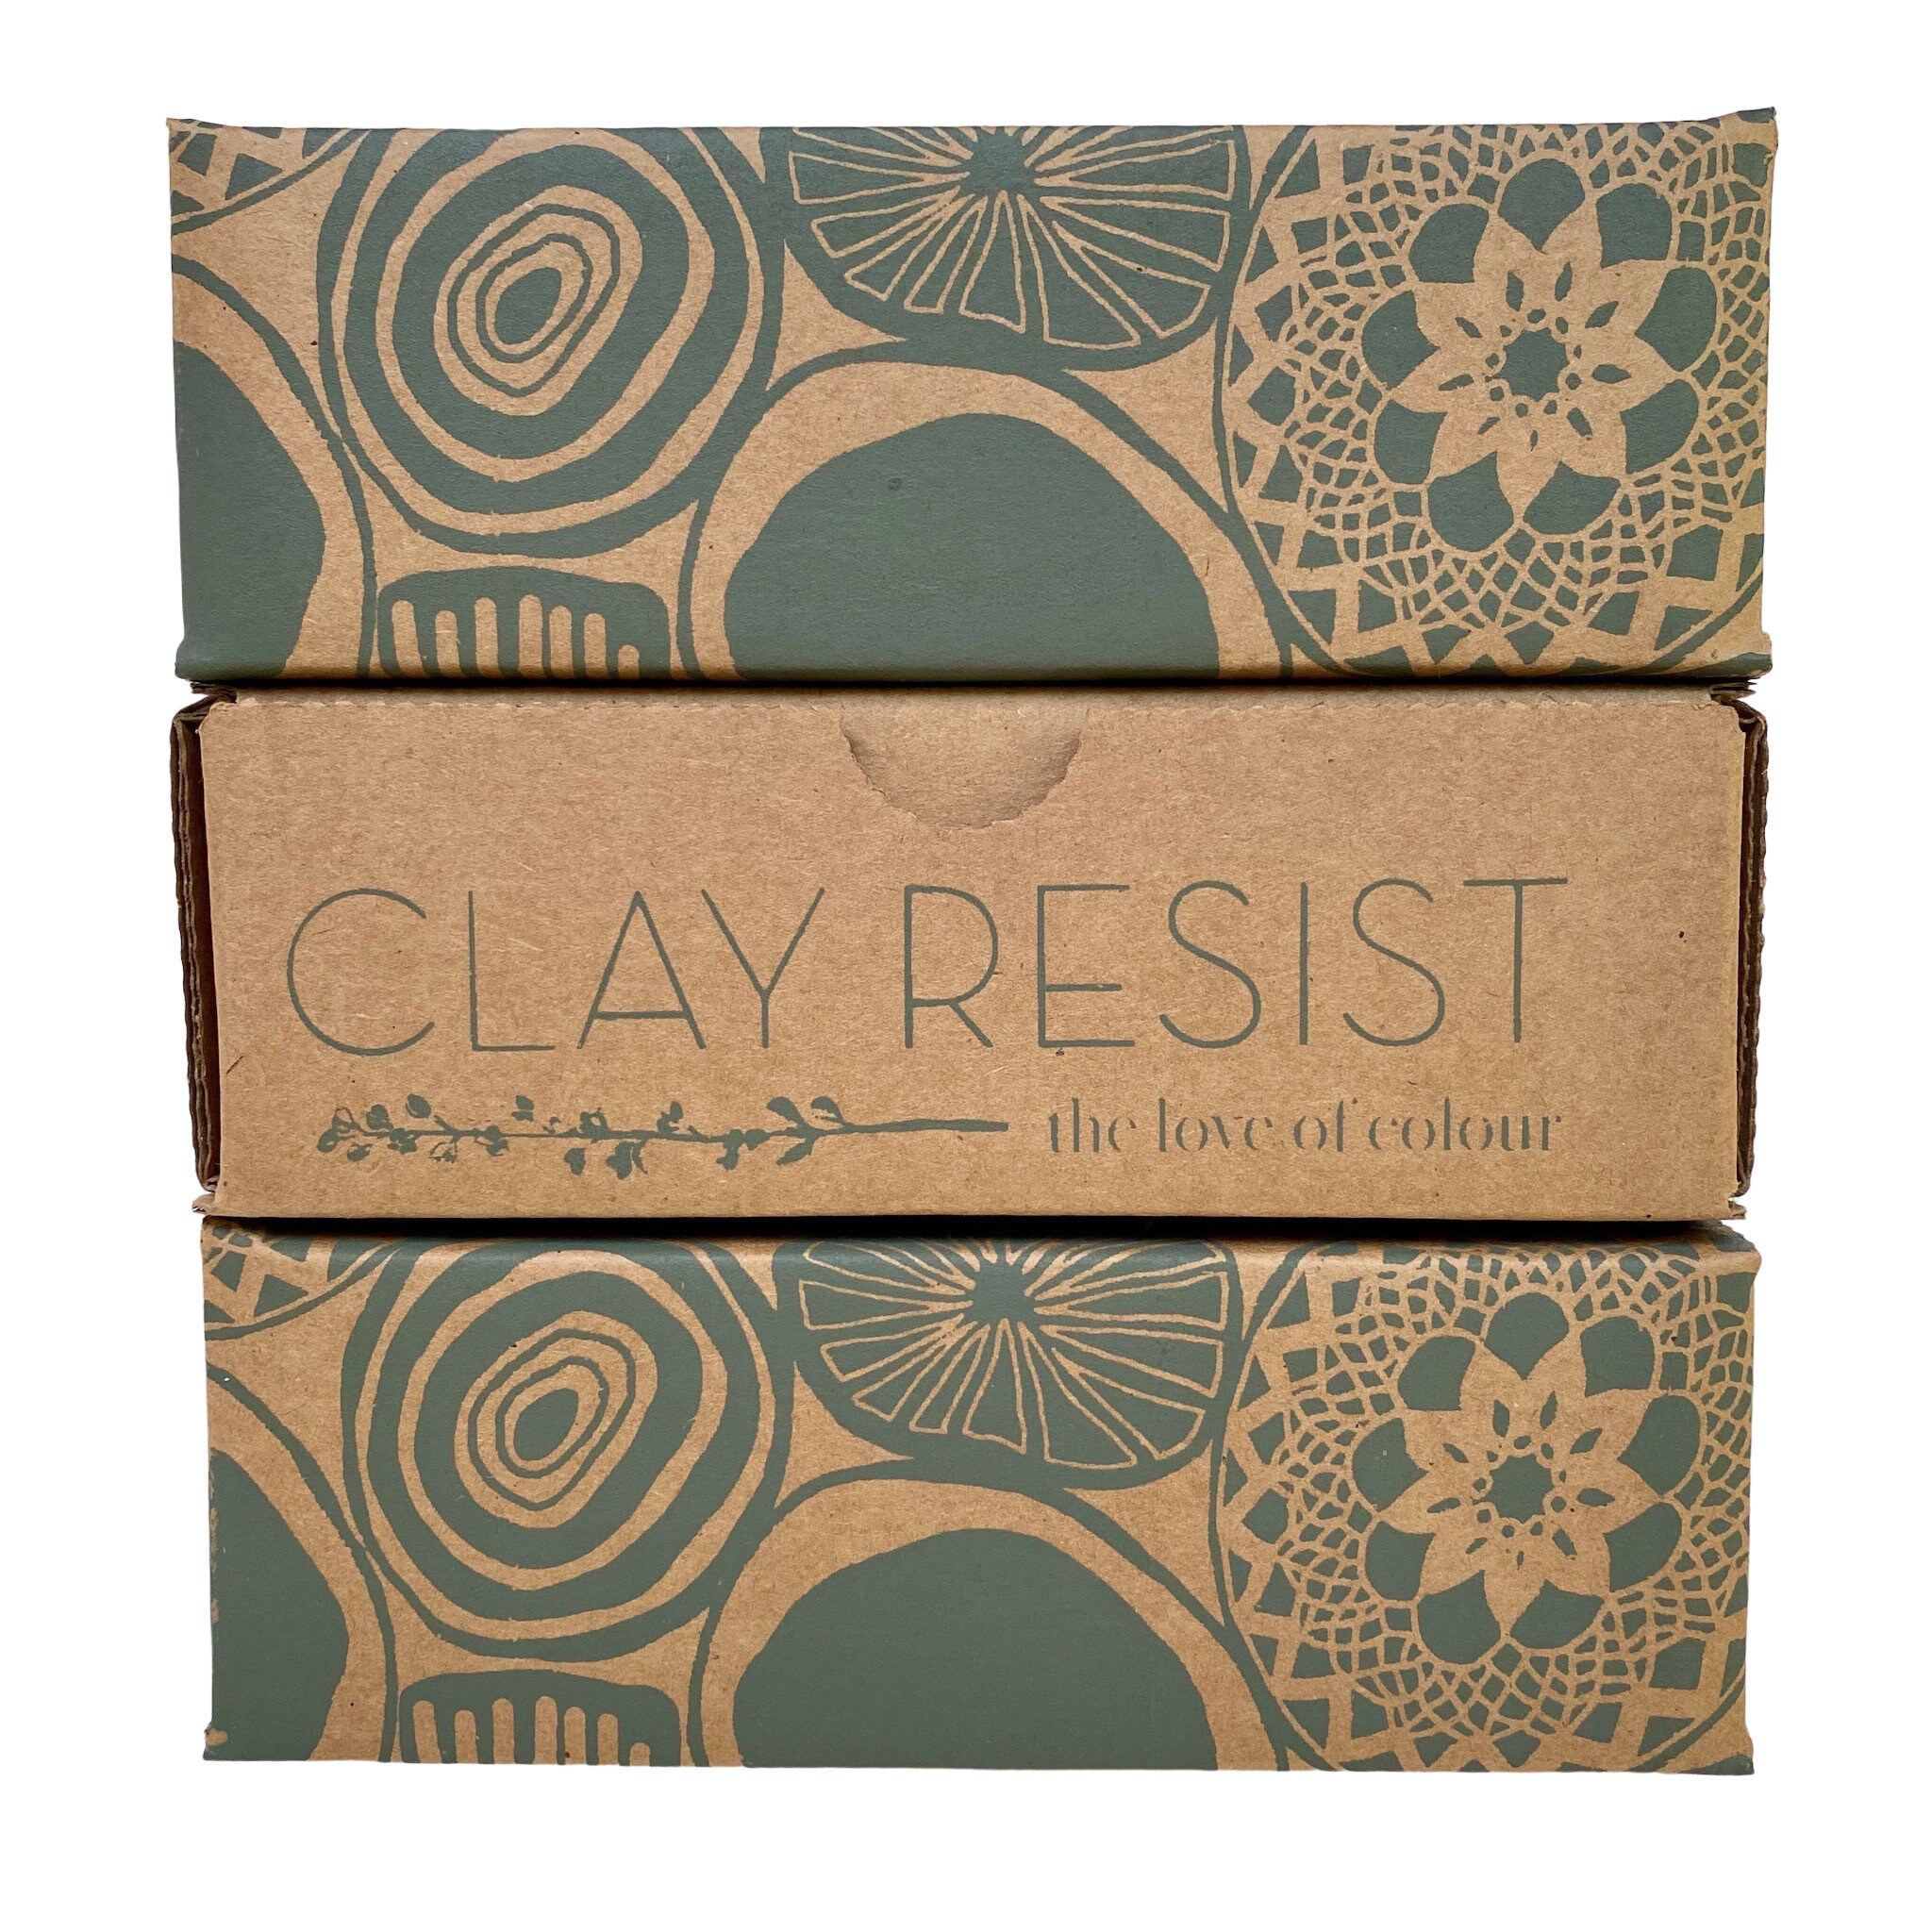 Indigo Clay Resist Printing Kit - A Threaded Needle